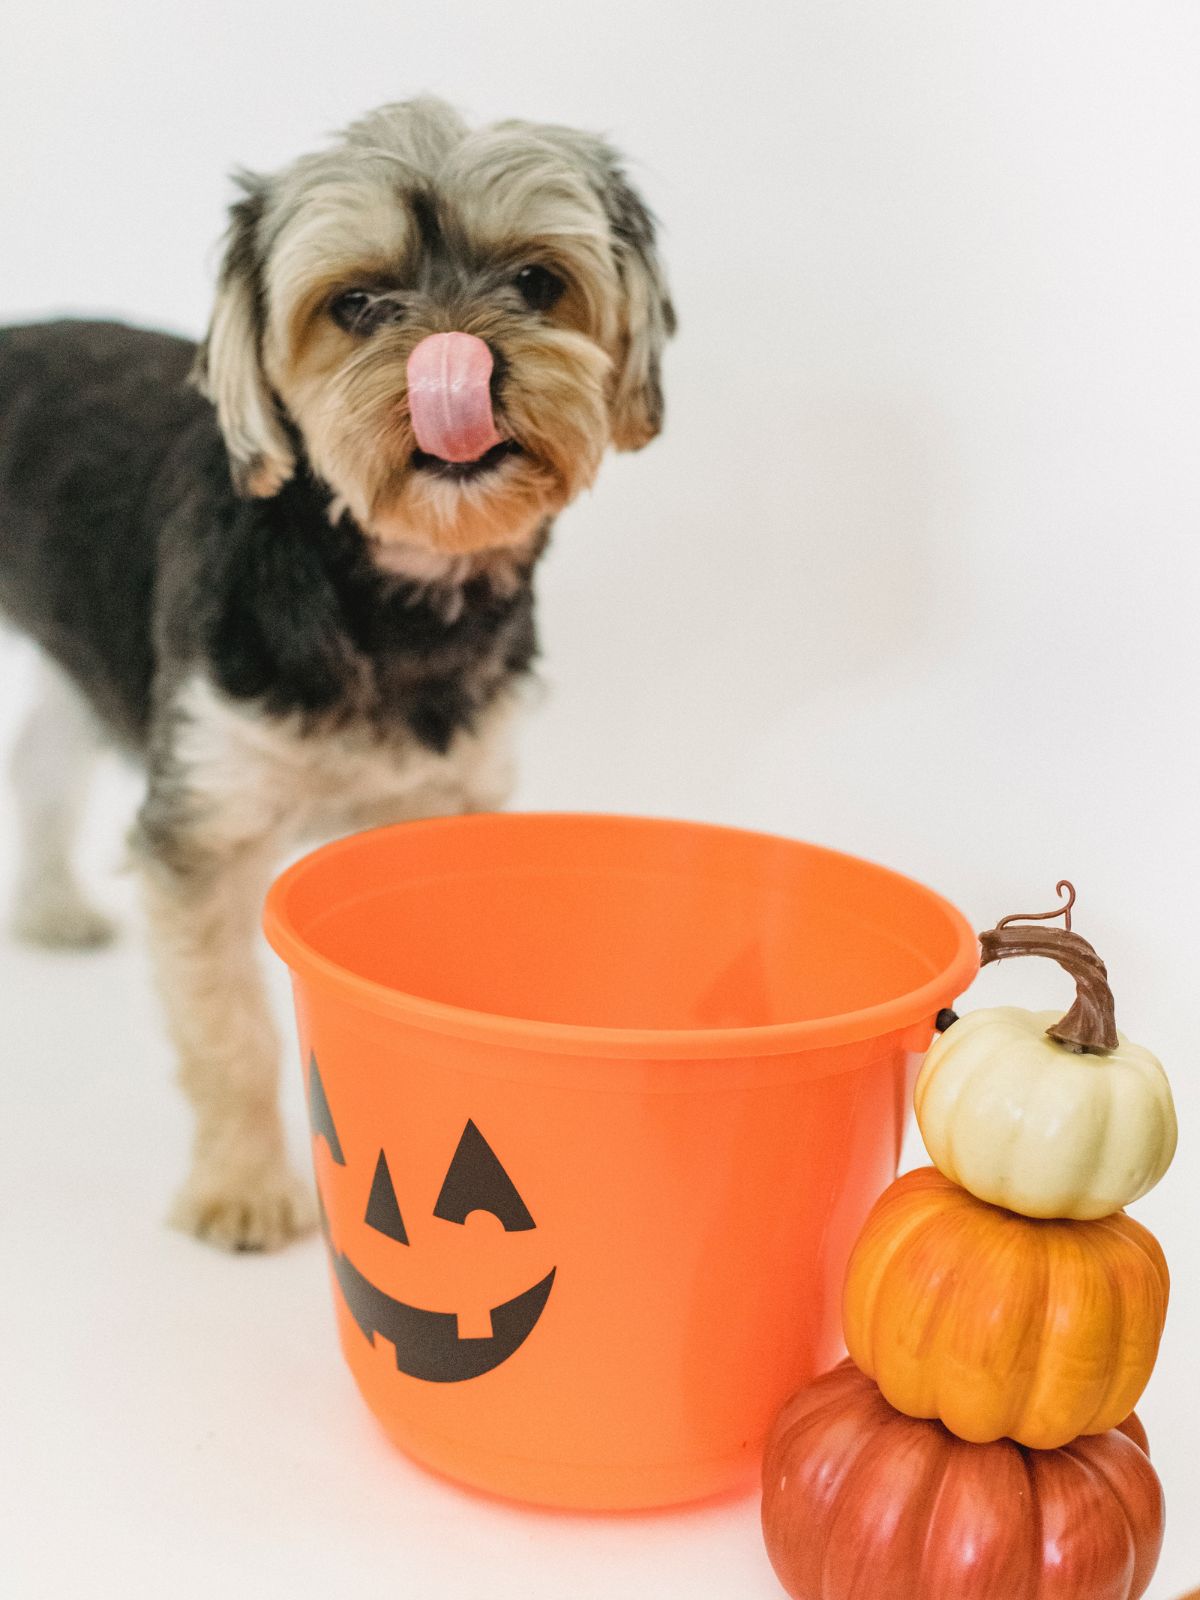 Dog with Pumpkins